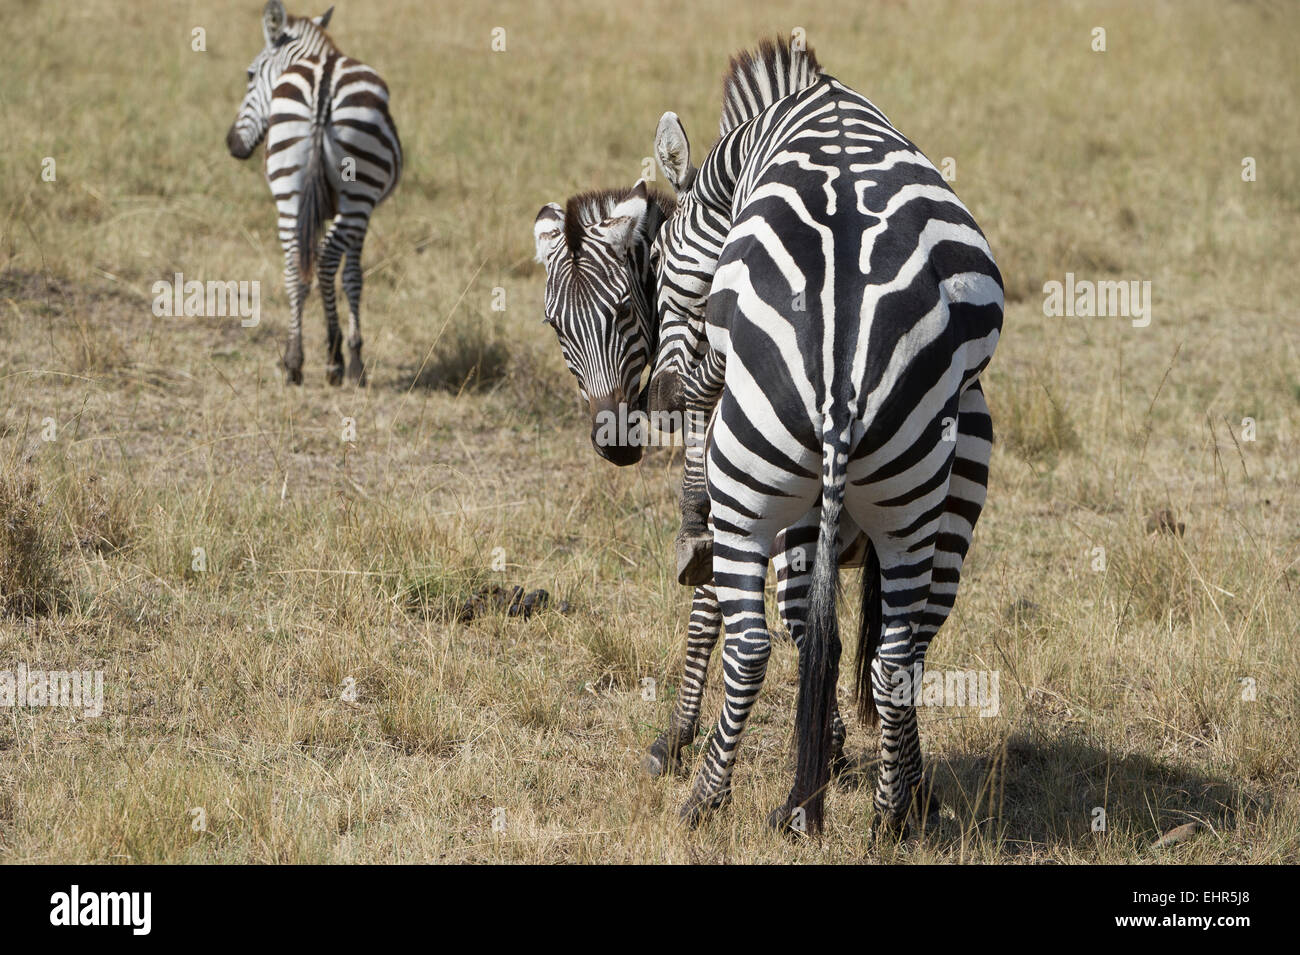 Zebra, luna di miele,Equus Fotodienst Schreyer 0049 172 162 5407 www.sportfoto-schreyer.jimdo.com Afrika,in Kenia, Massai Mara 2015 Foto Stock